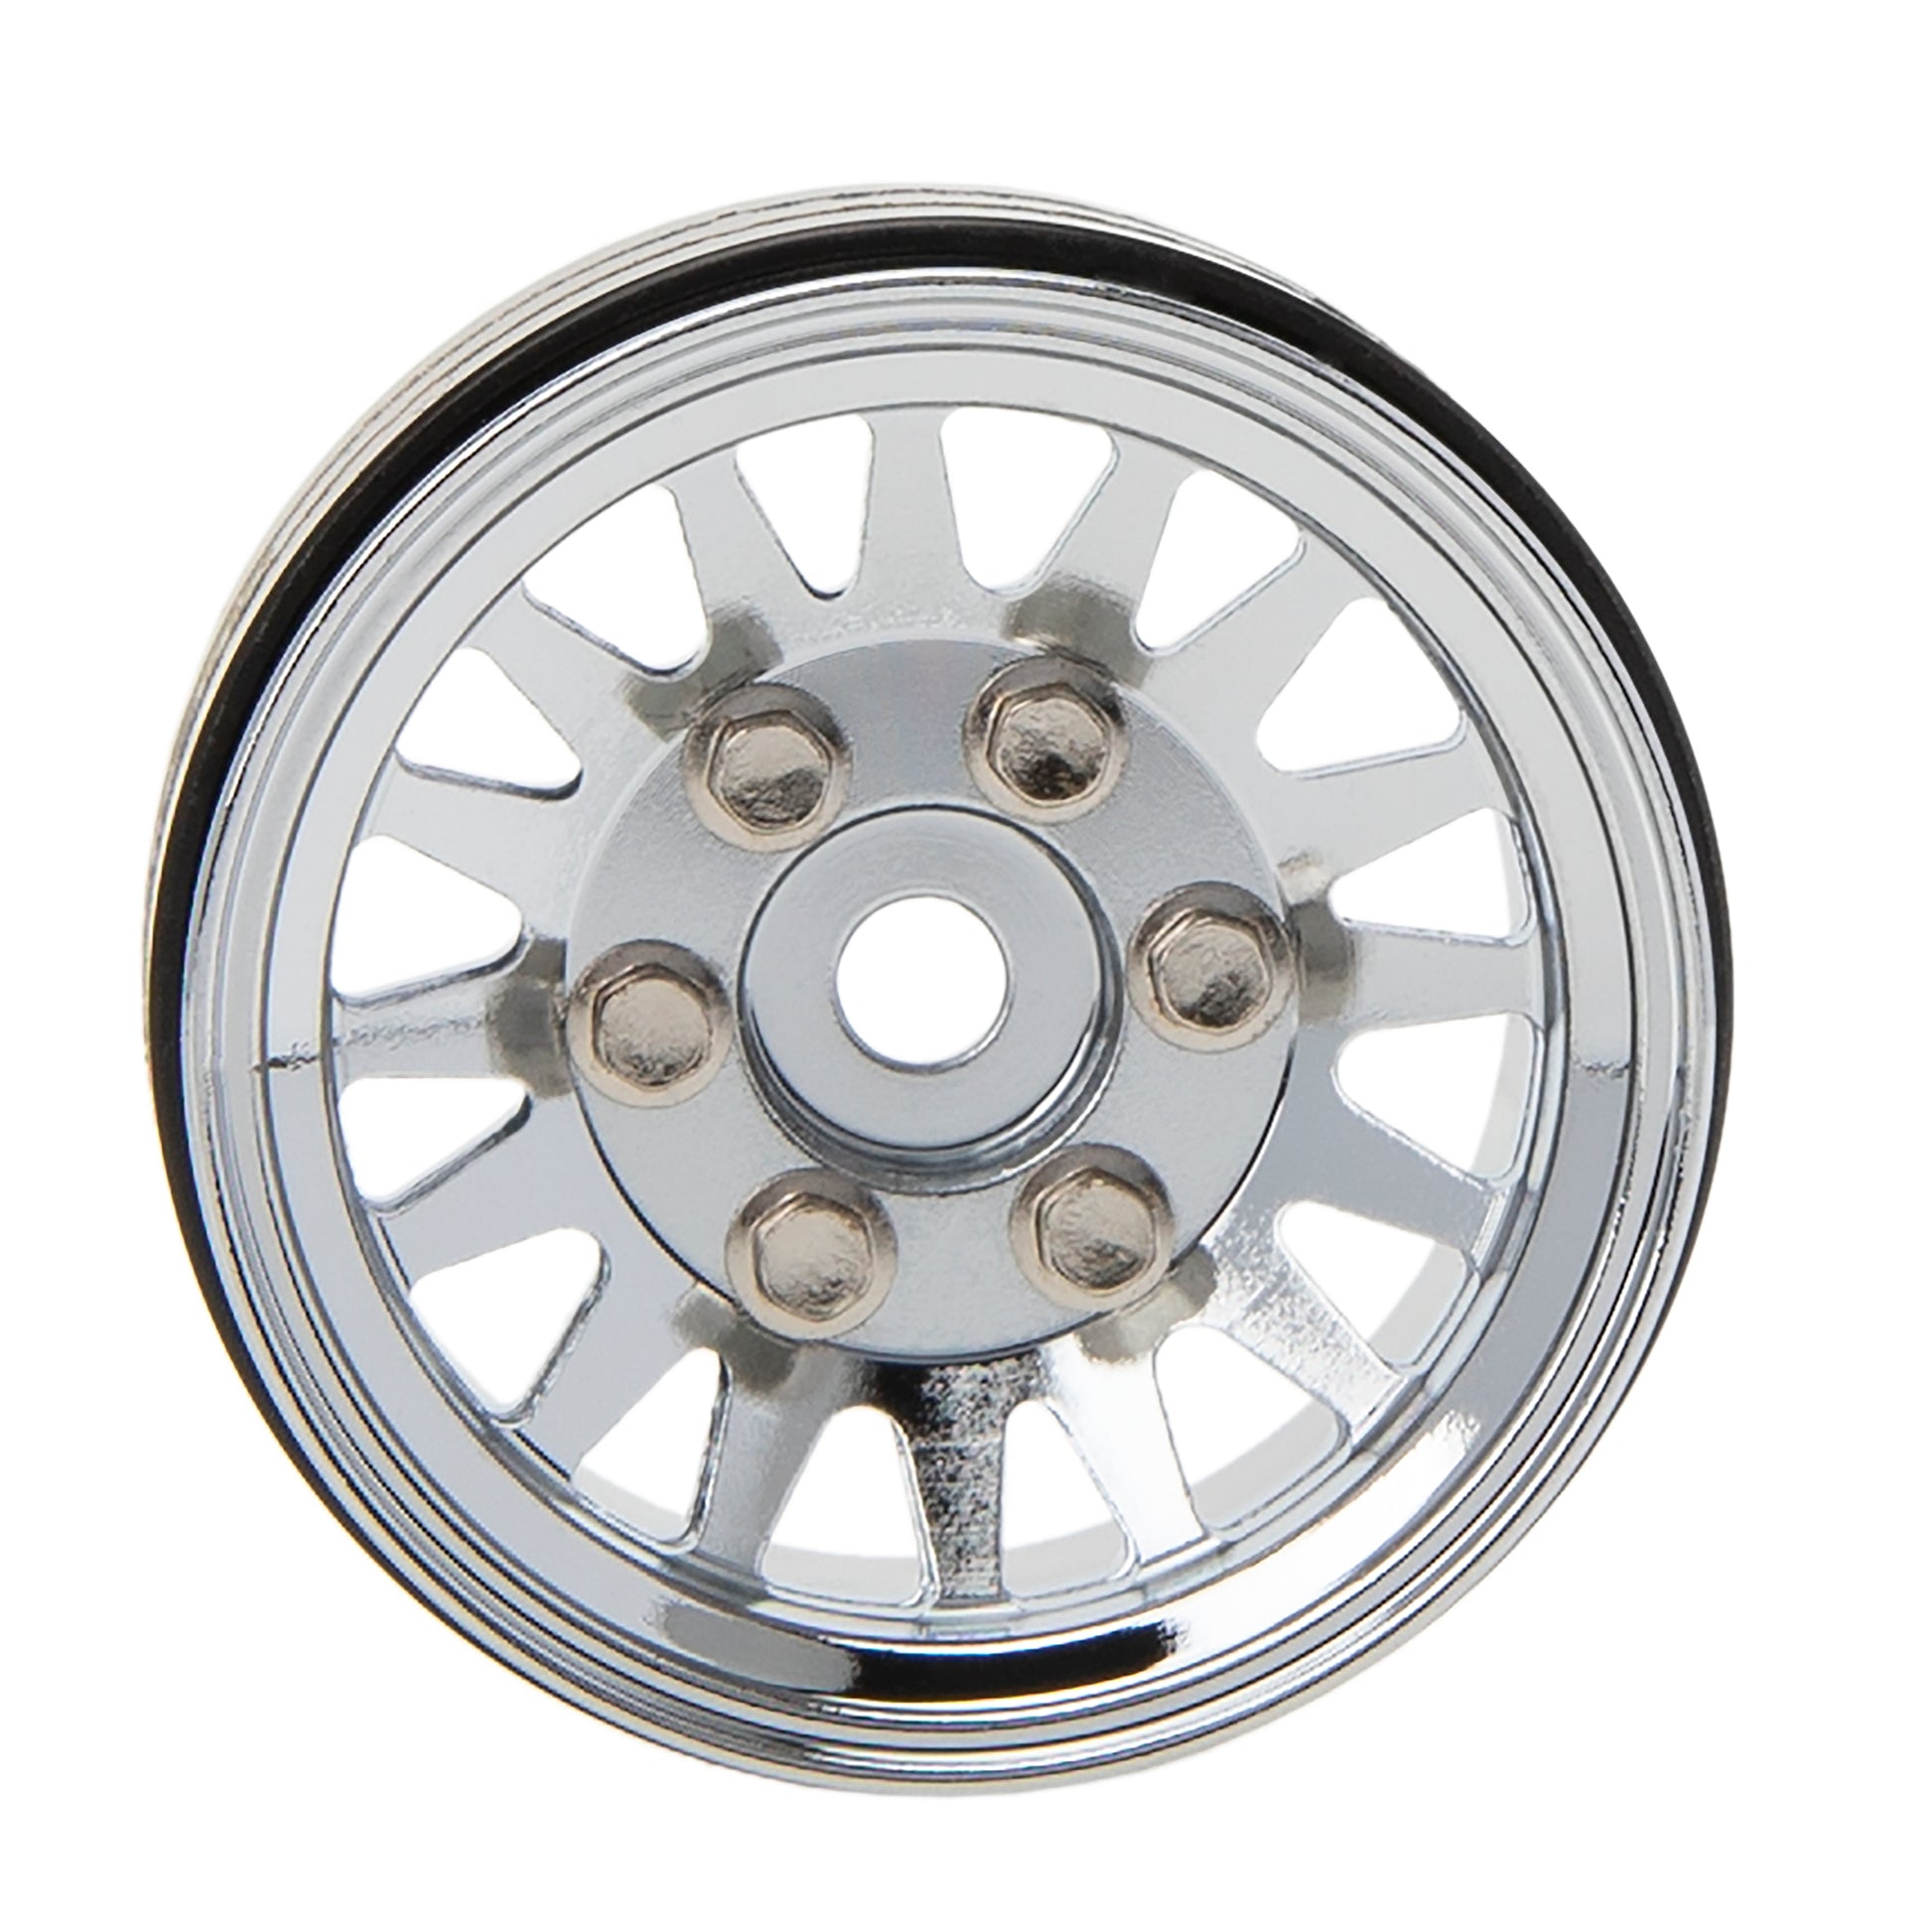 Fifteen star type 1.0" Beadlock Wheel for SCX24 and TRX4M